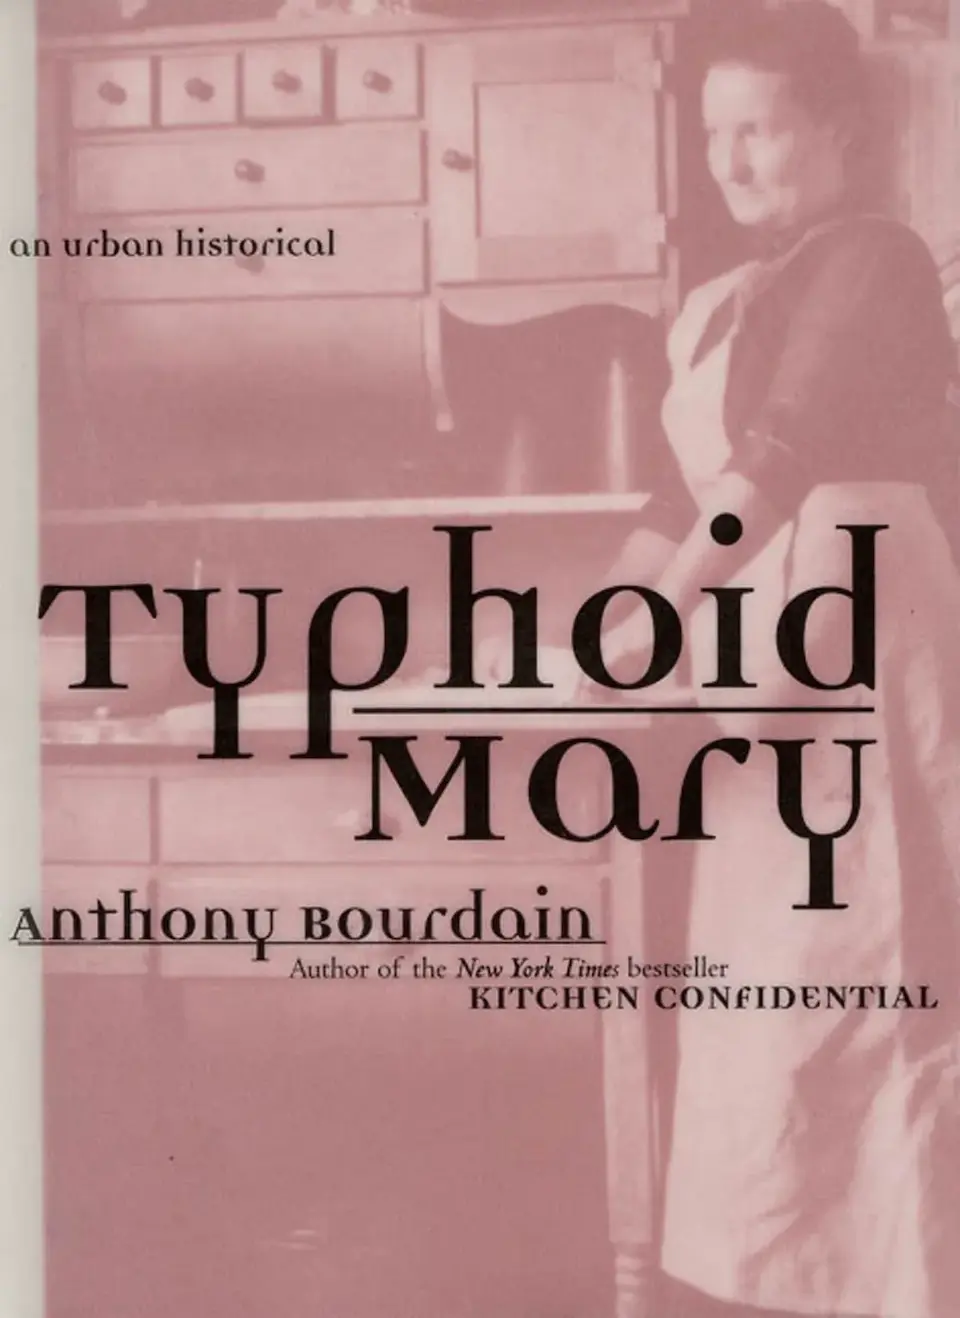 Typhoid Mary by Anthony Bourdain finished on 2021 Nov 29